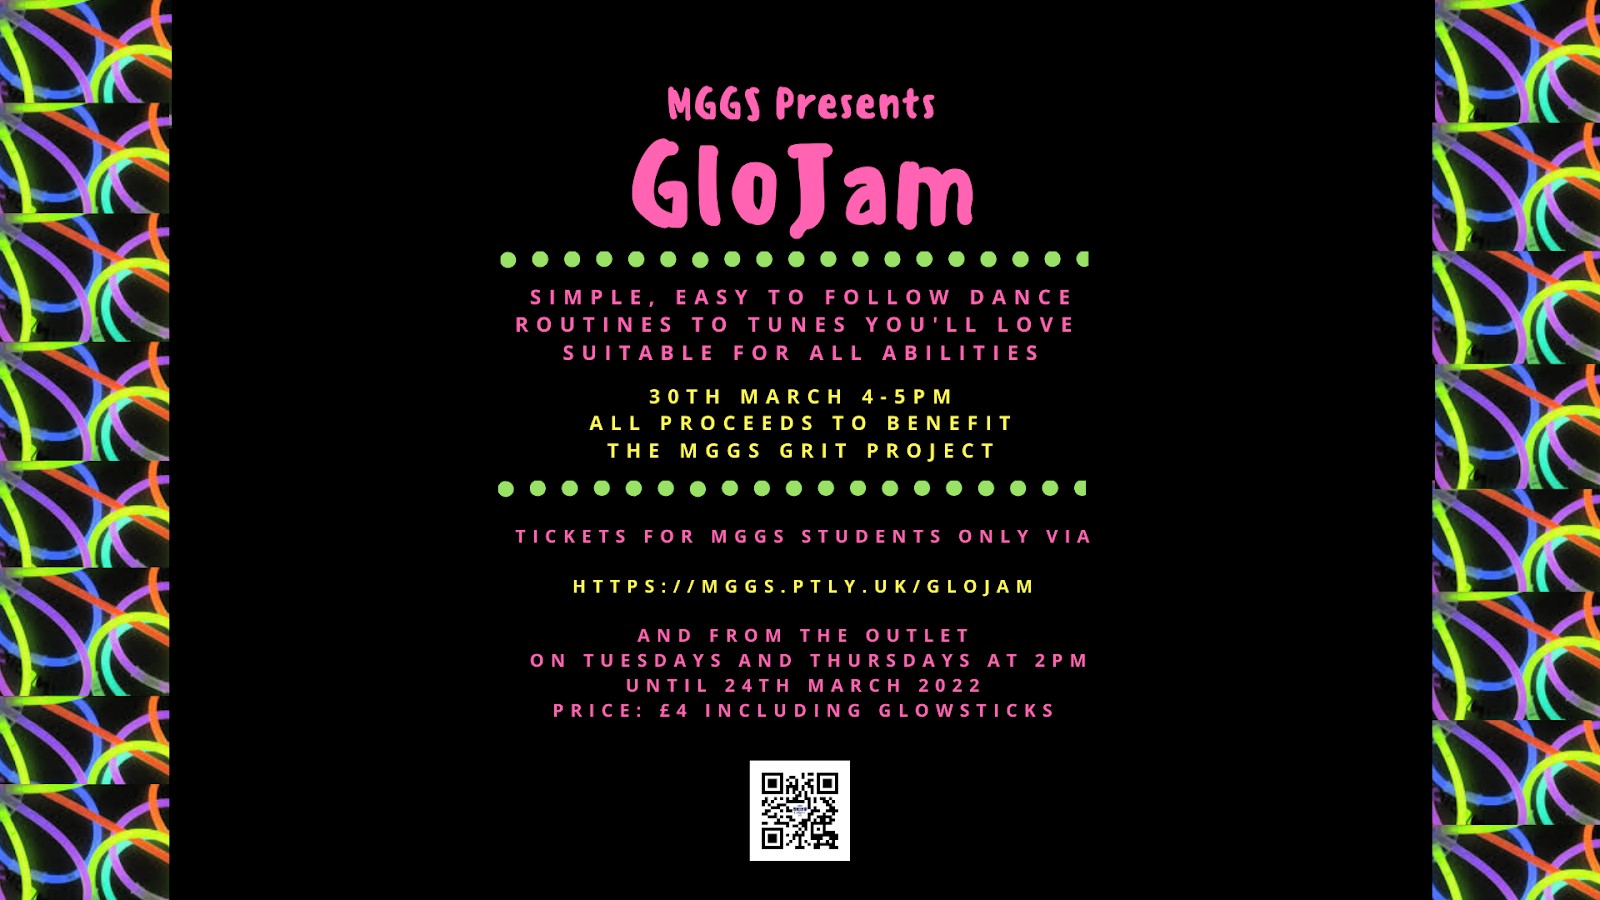 GloJam - Last few tickets remaining